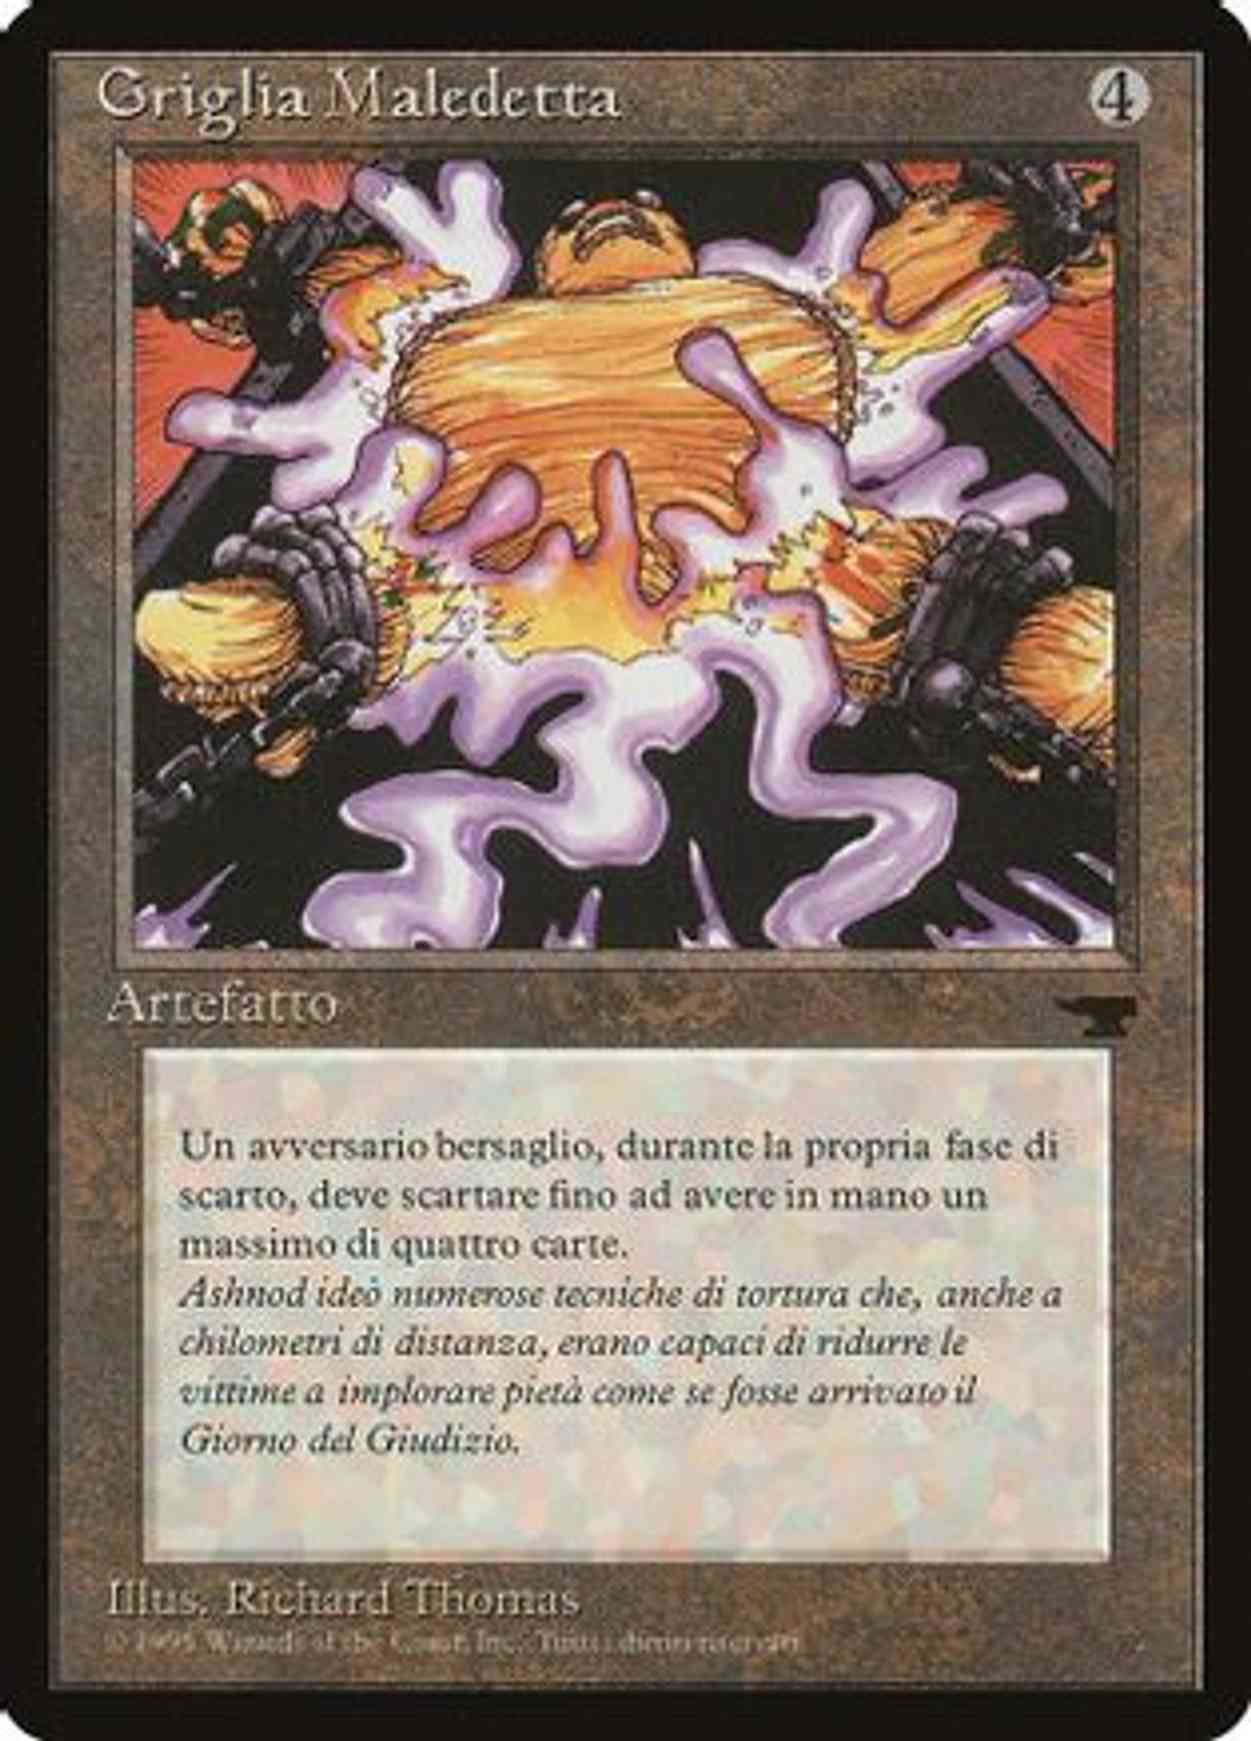 Cursed Rack (Italian) - "Griglia Maledetta" magic card front